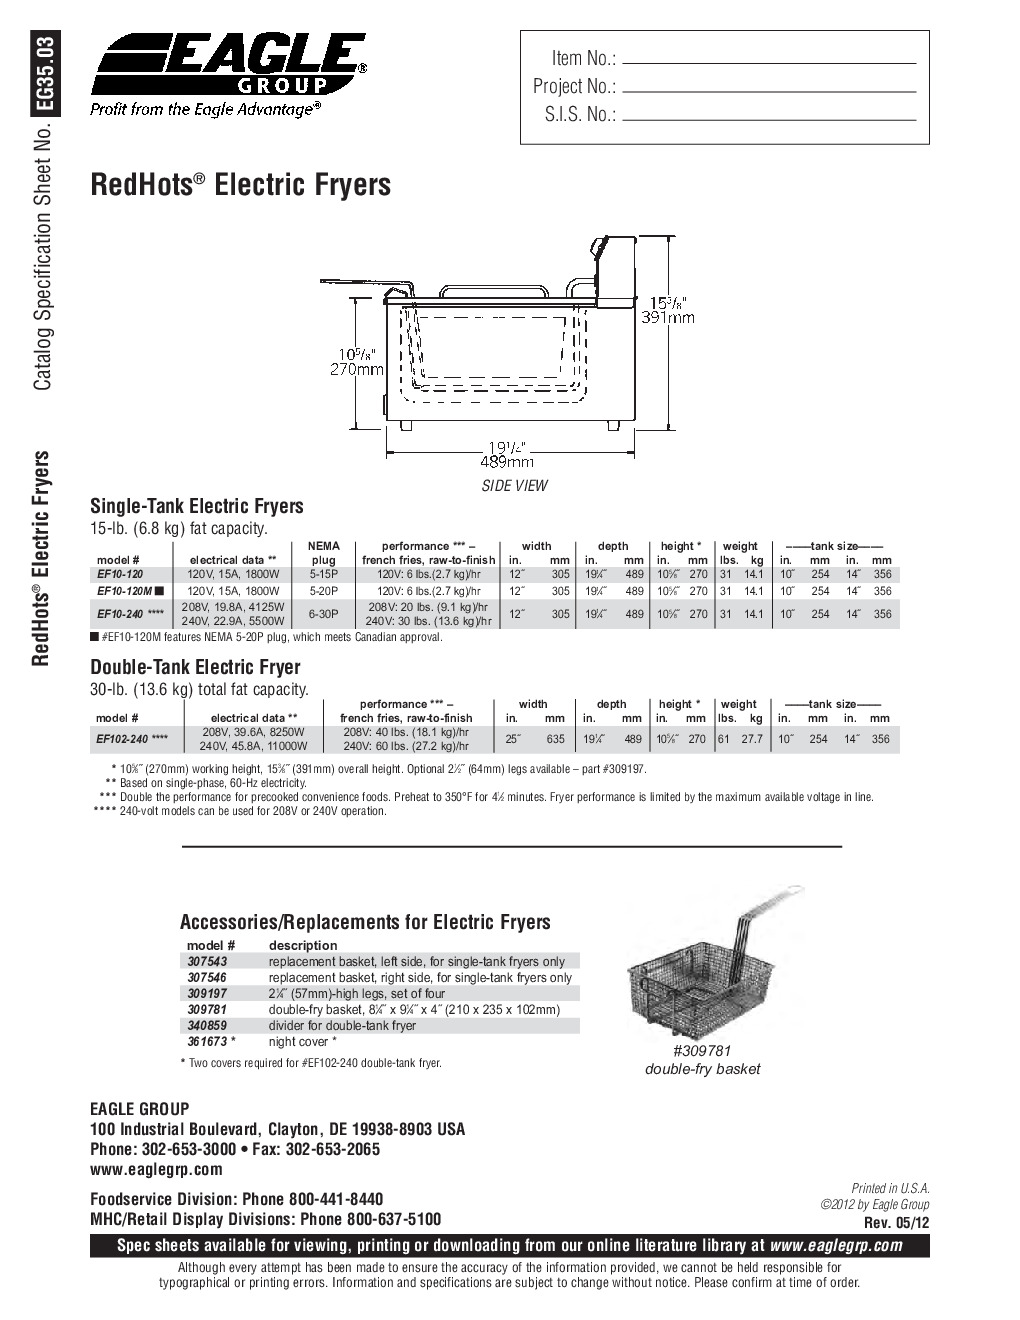 Eagle Group EF10-120-X Full Pot Countertop Electric Fryer w/ 15-lb Capacity, 2 Baskets, 1800w